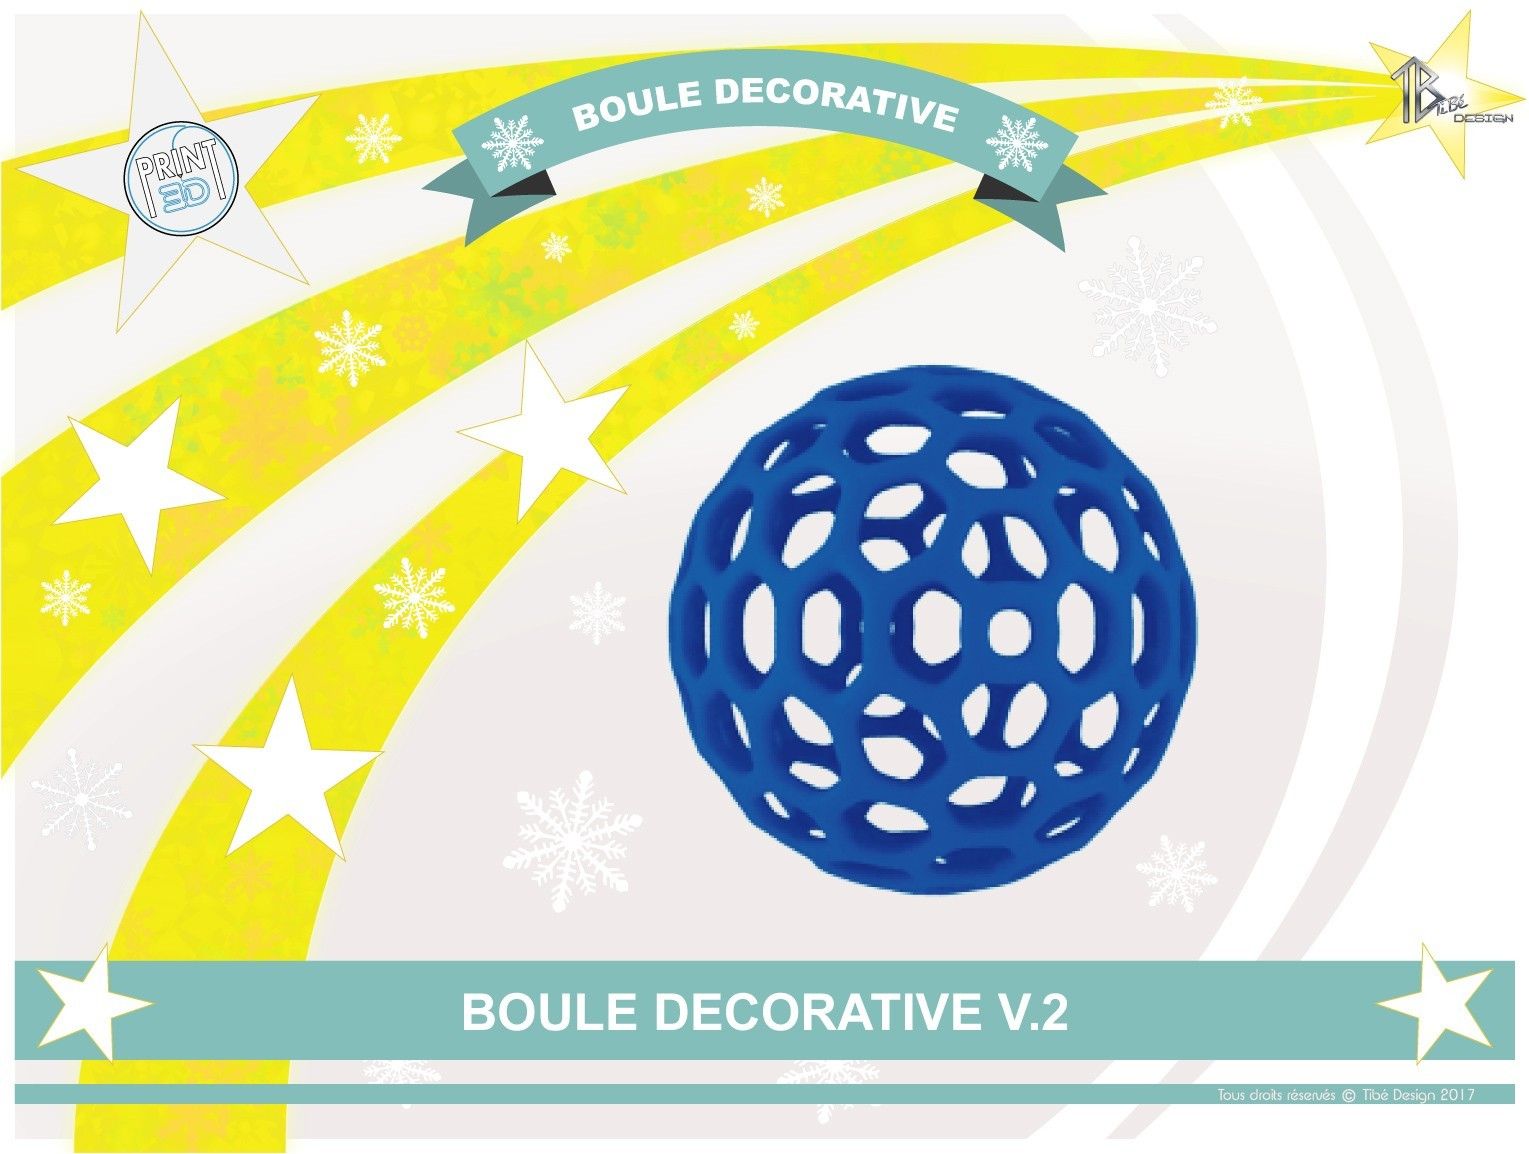 boule_deco_v2_def01.jpg Download free STL file Decorative ball V.2 • 3D print object, Tibe-Design